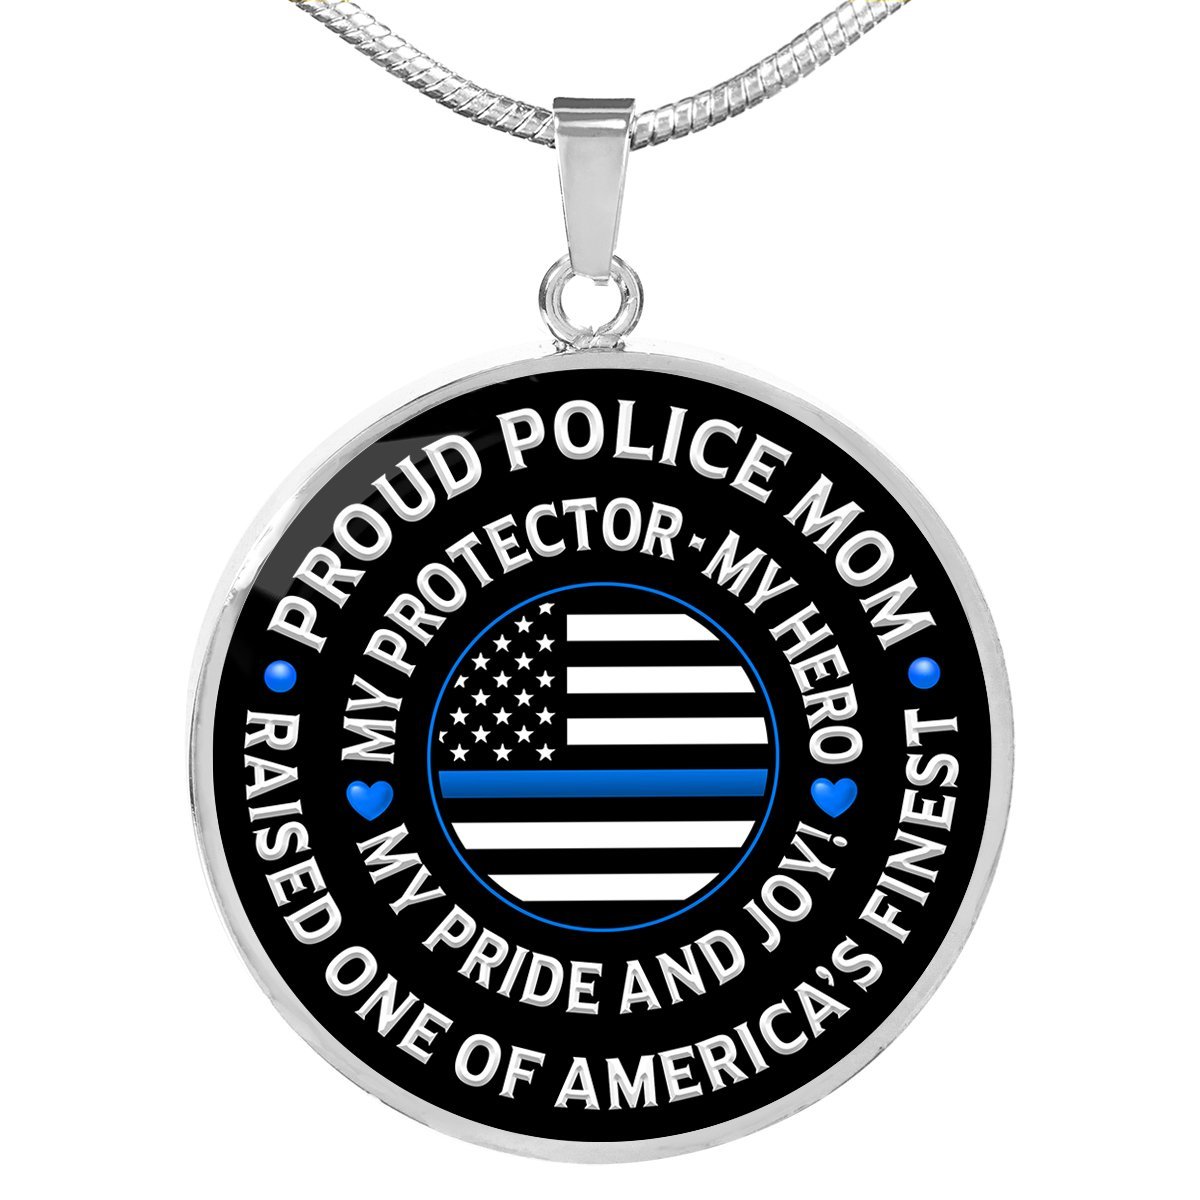 Police Mom "Pride and Joy" Necklace - Heroic Defender